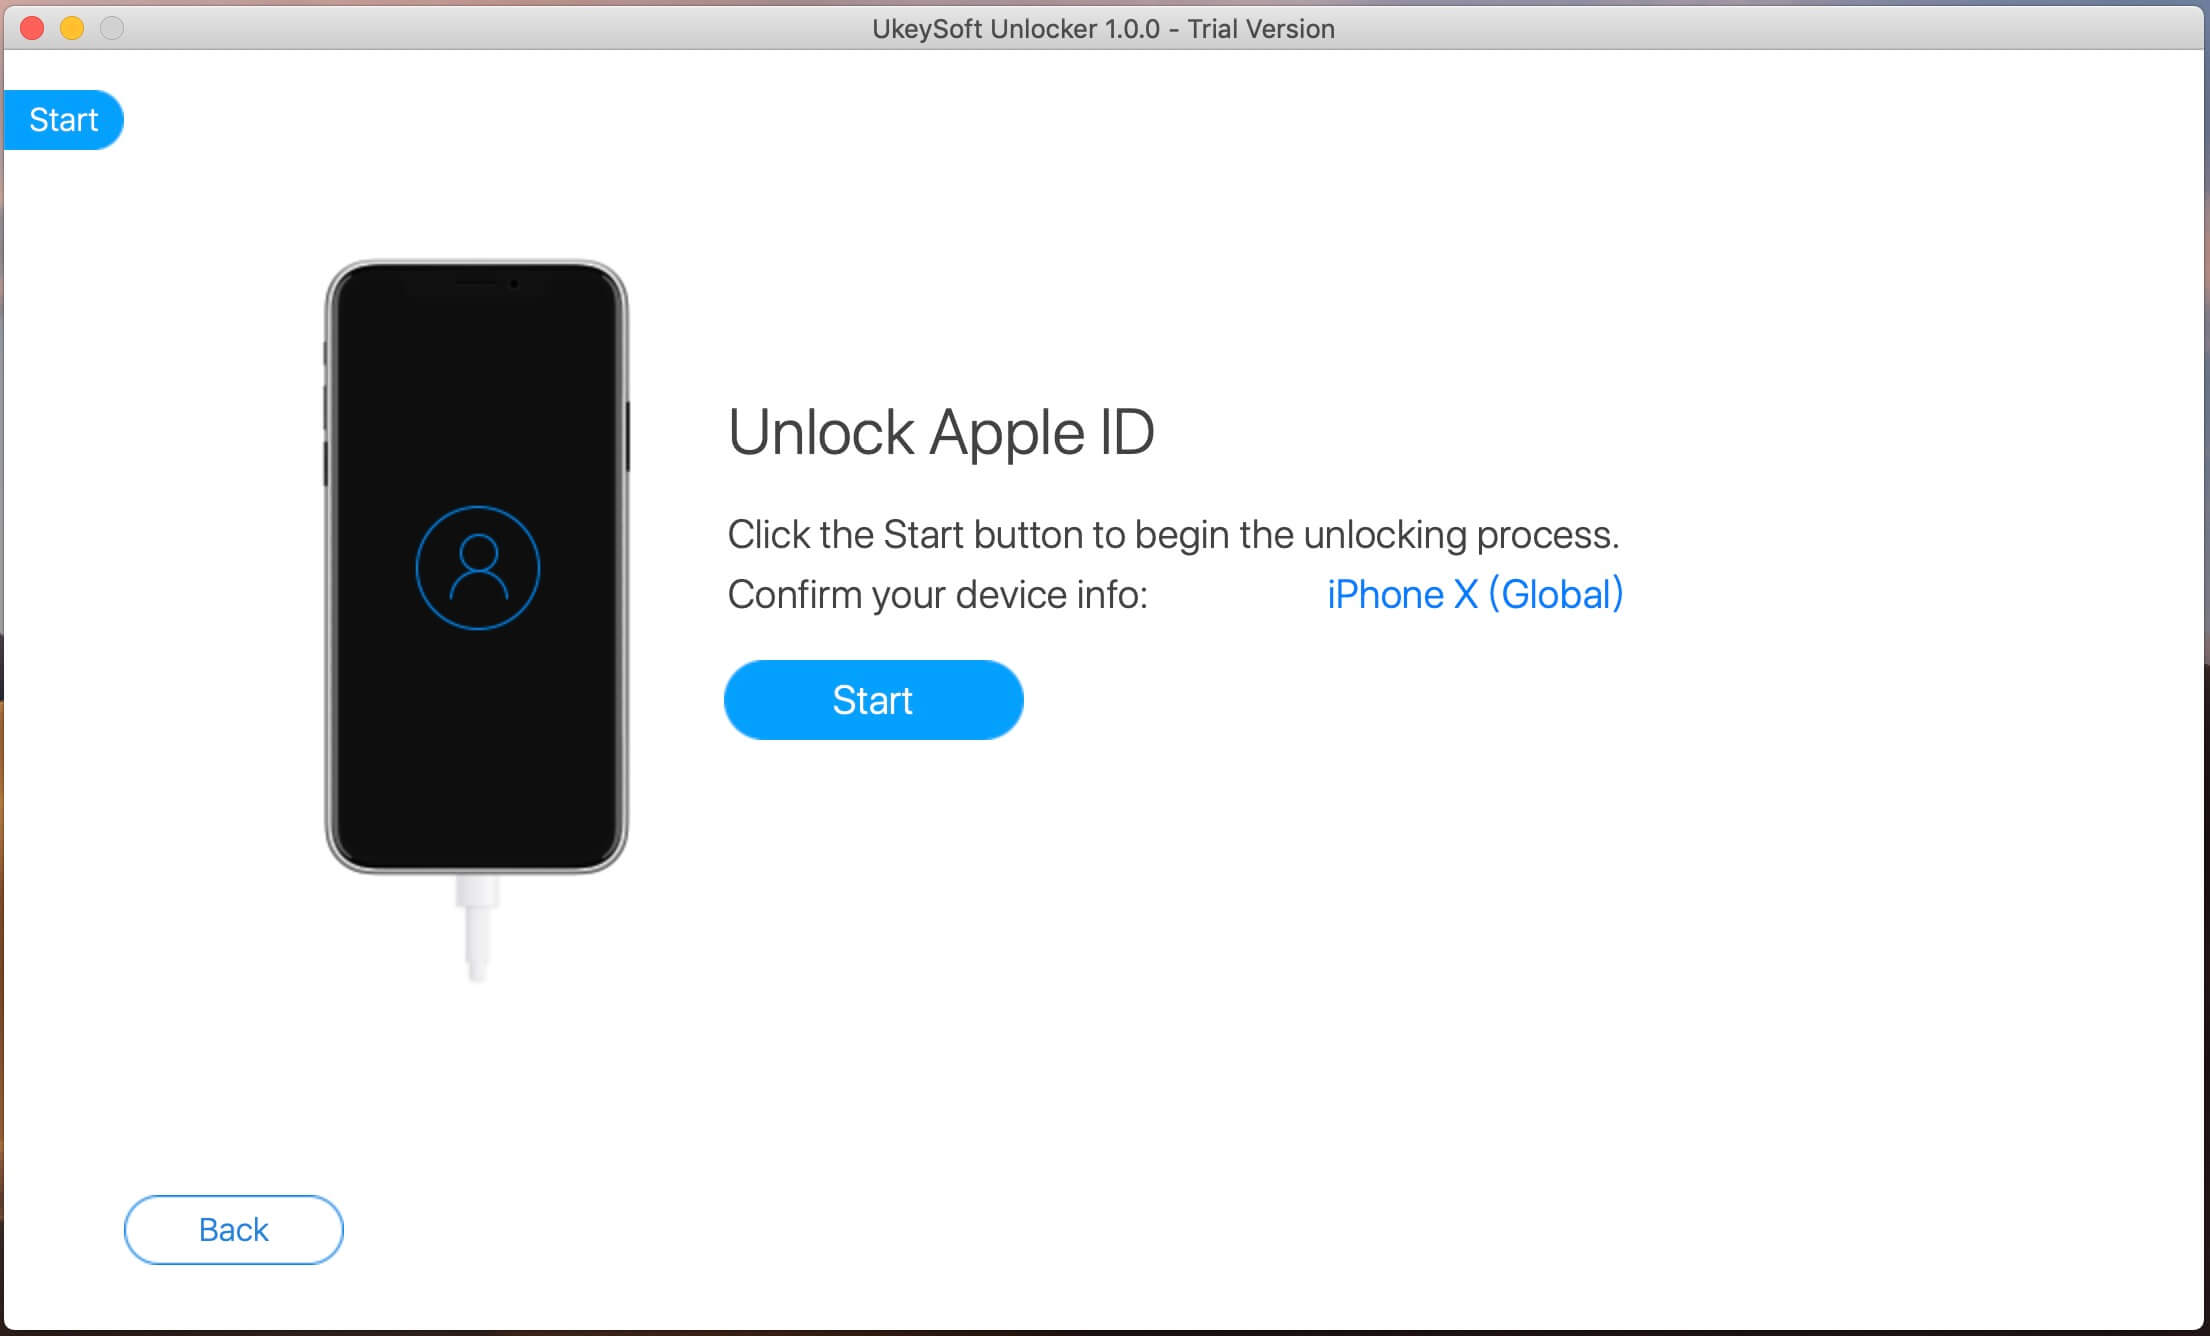 unlock a disabled Apple ID with UkeySoft Unlocker